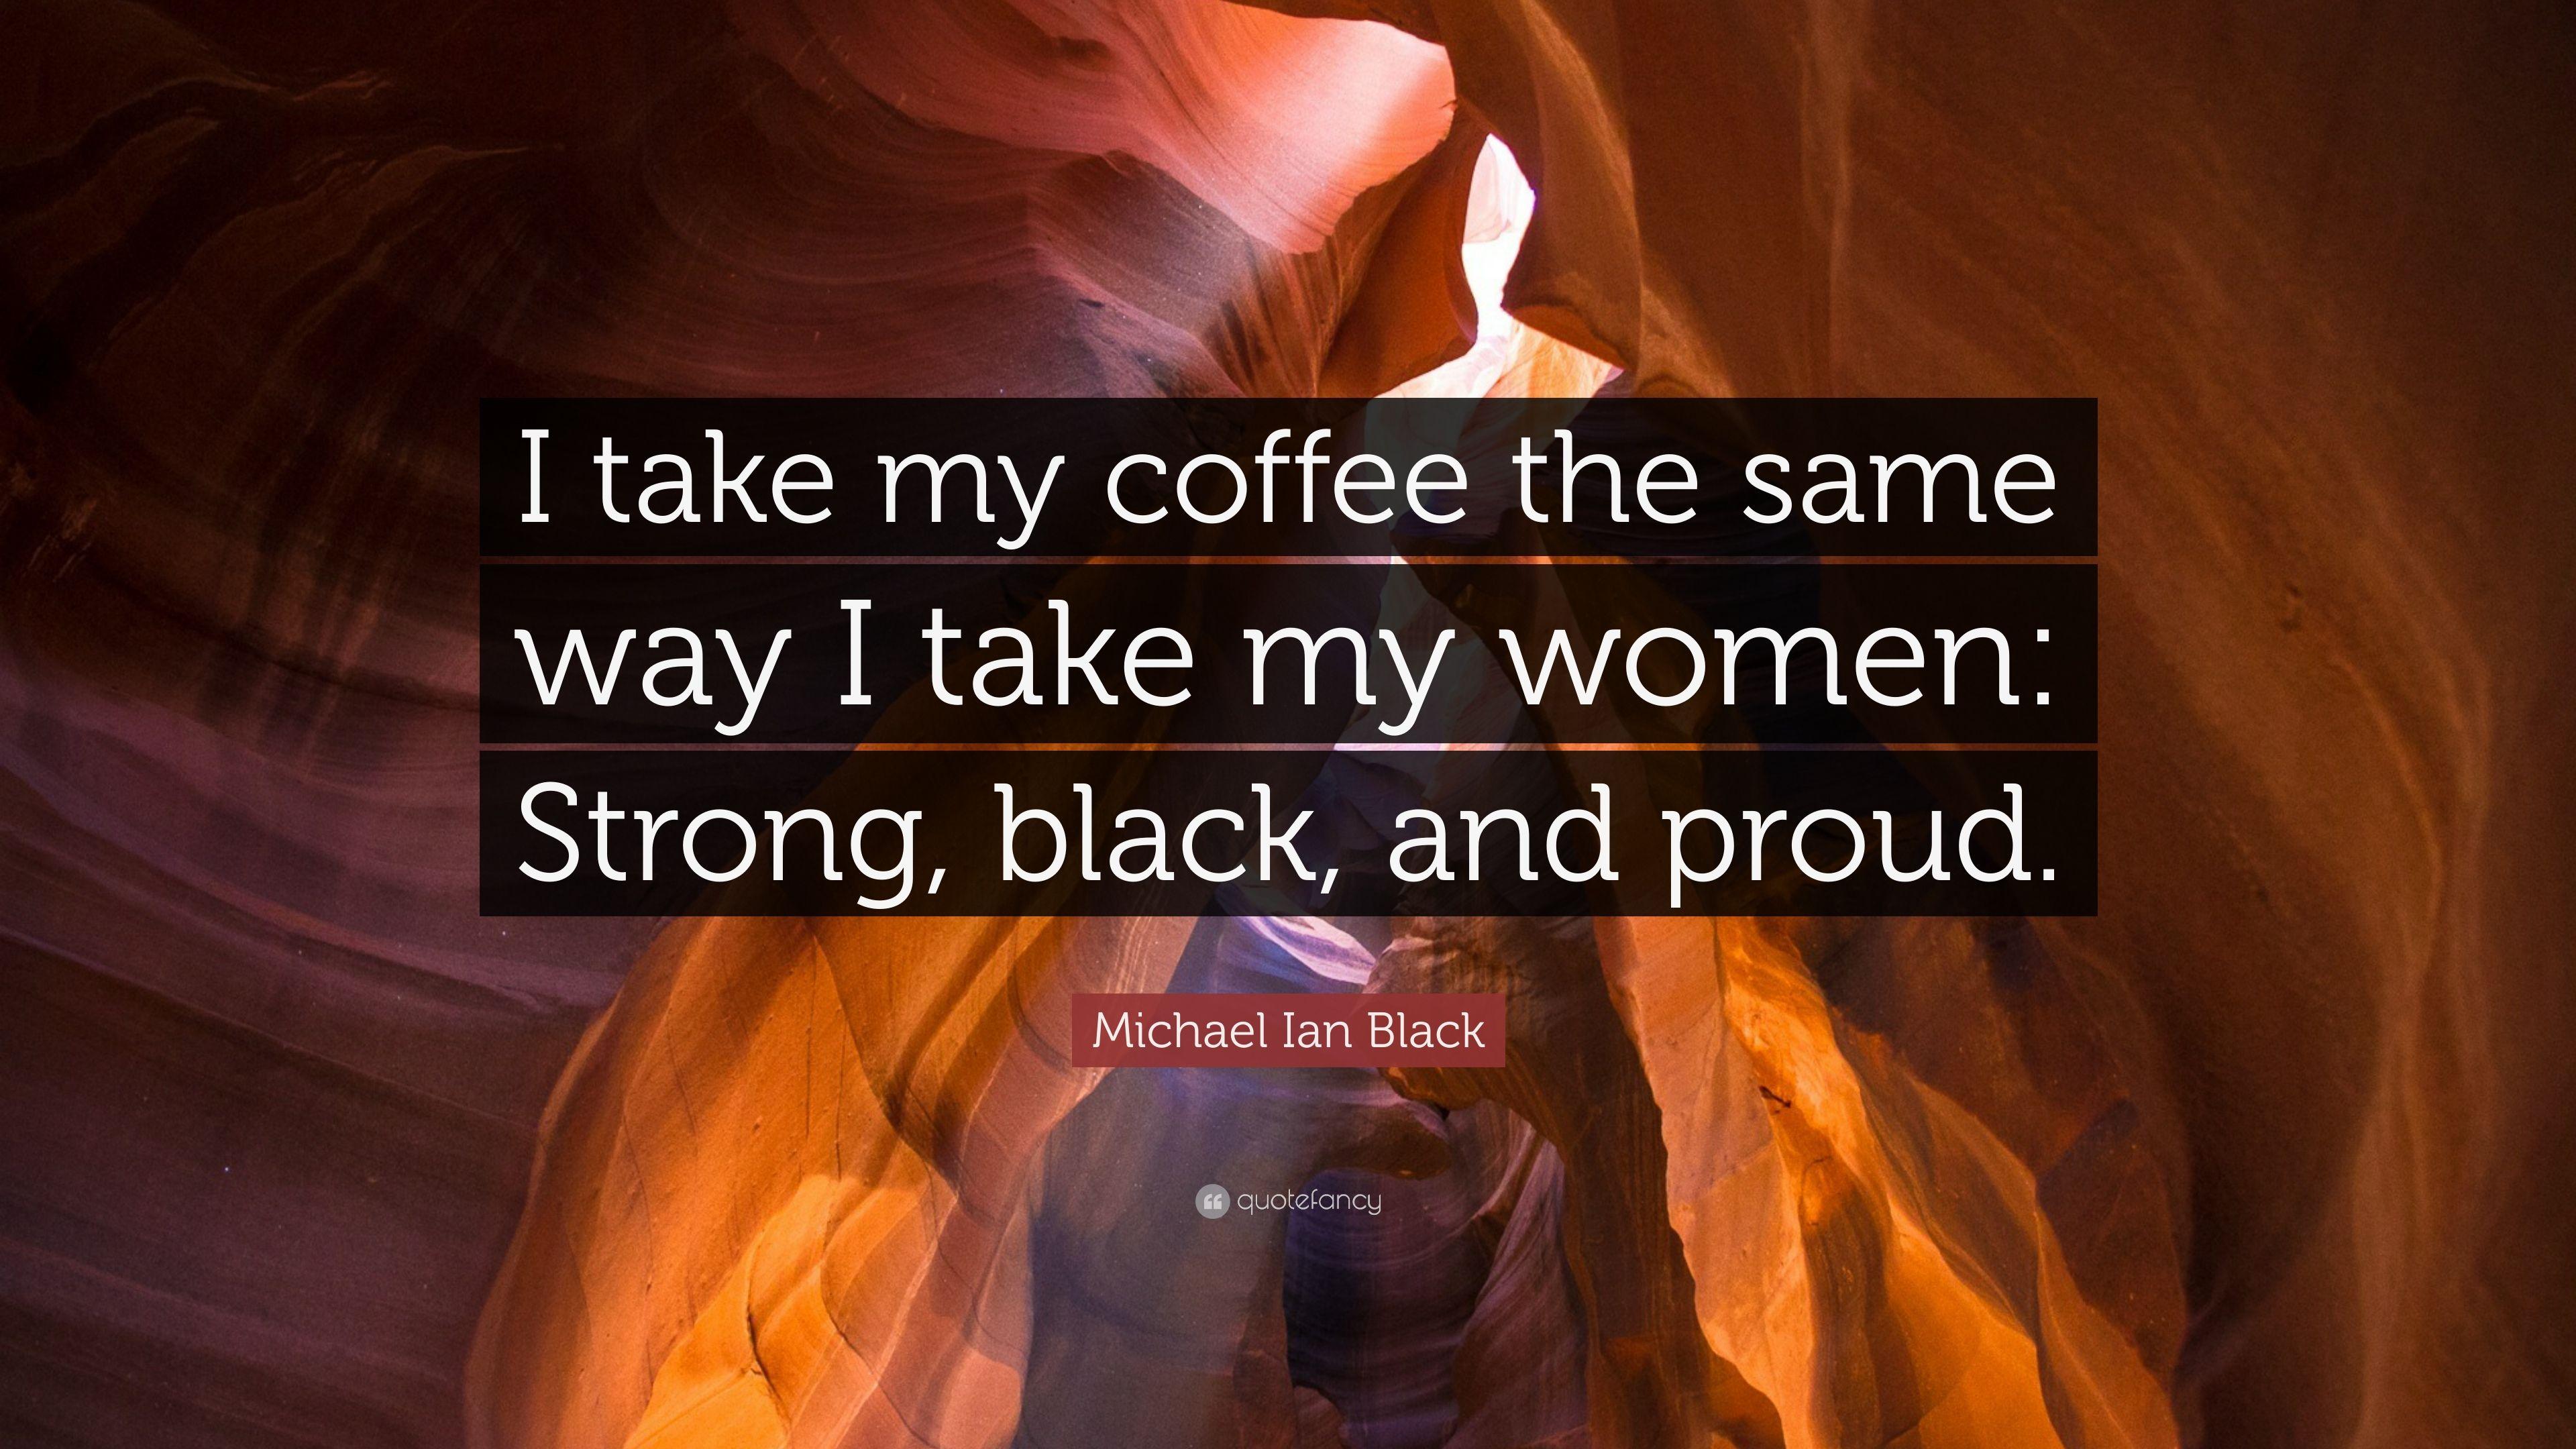 Michael Ian Black Quote: “I take my coffee the same way I take my